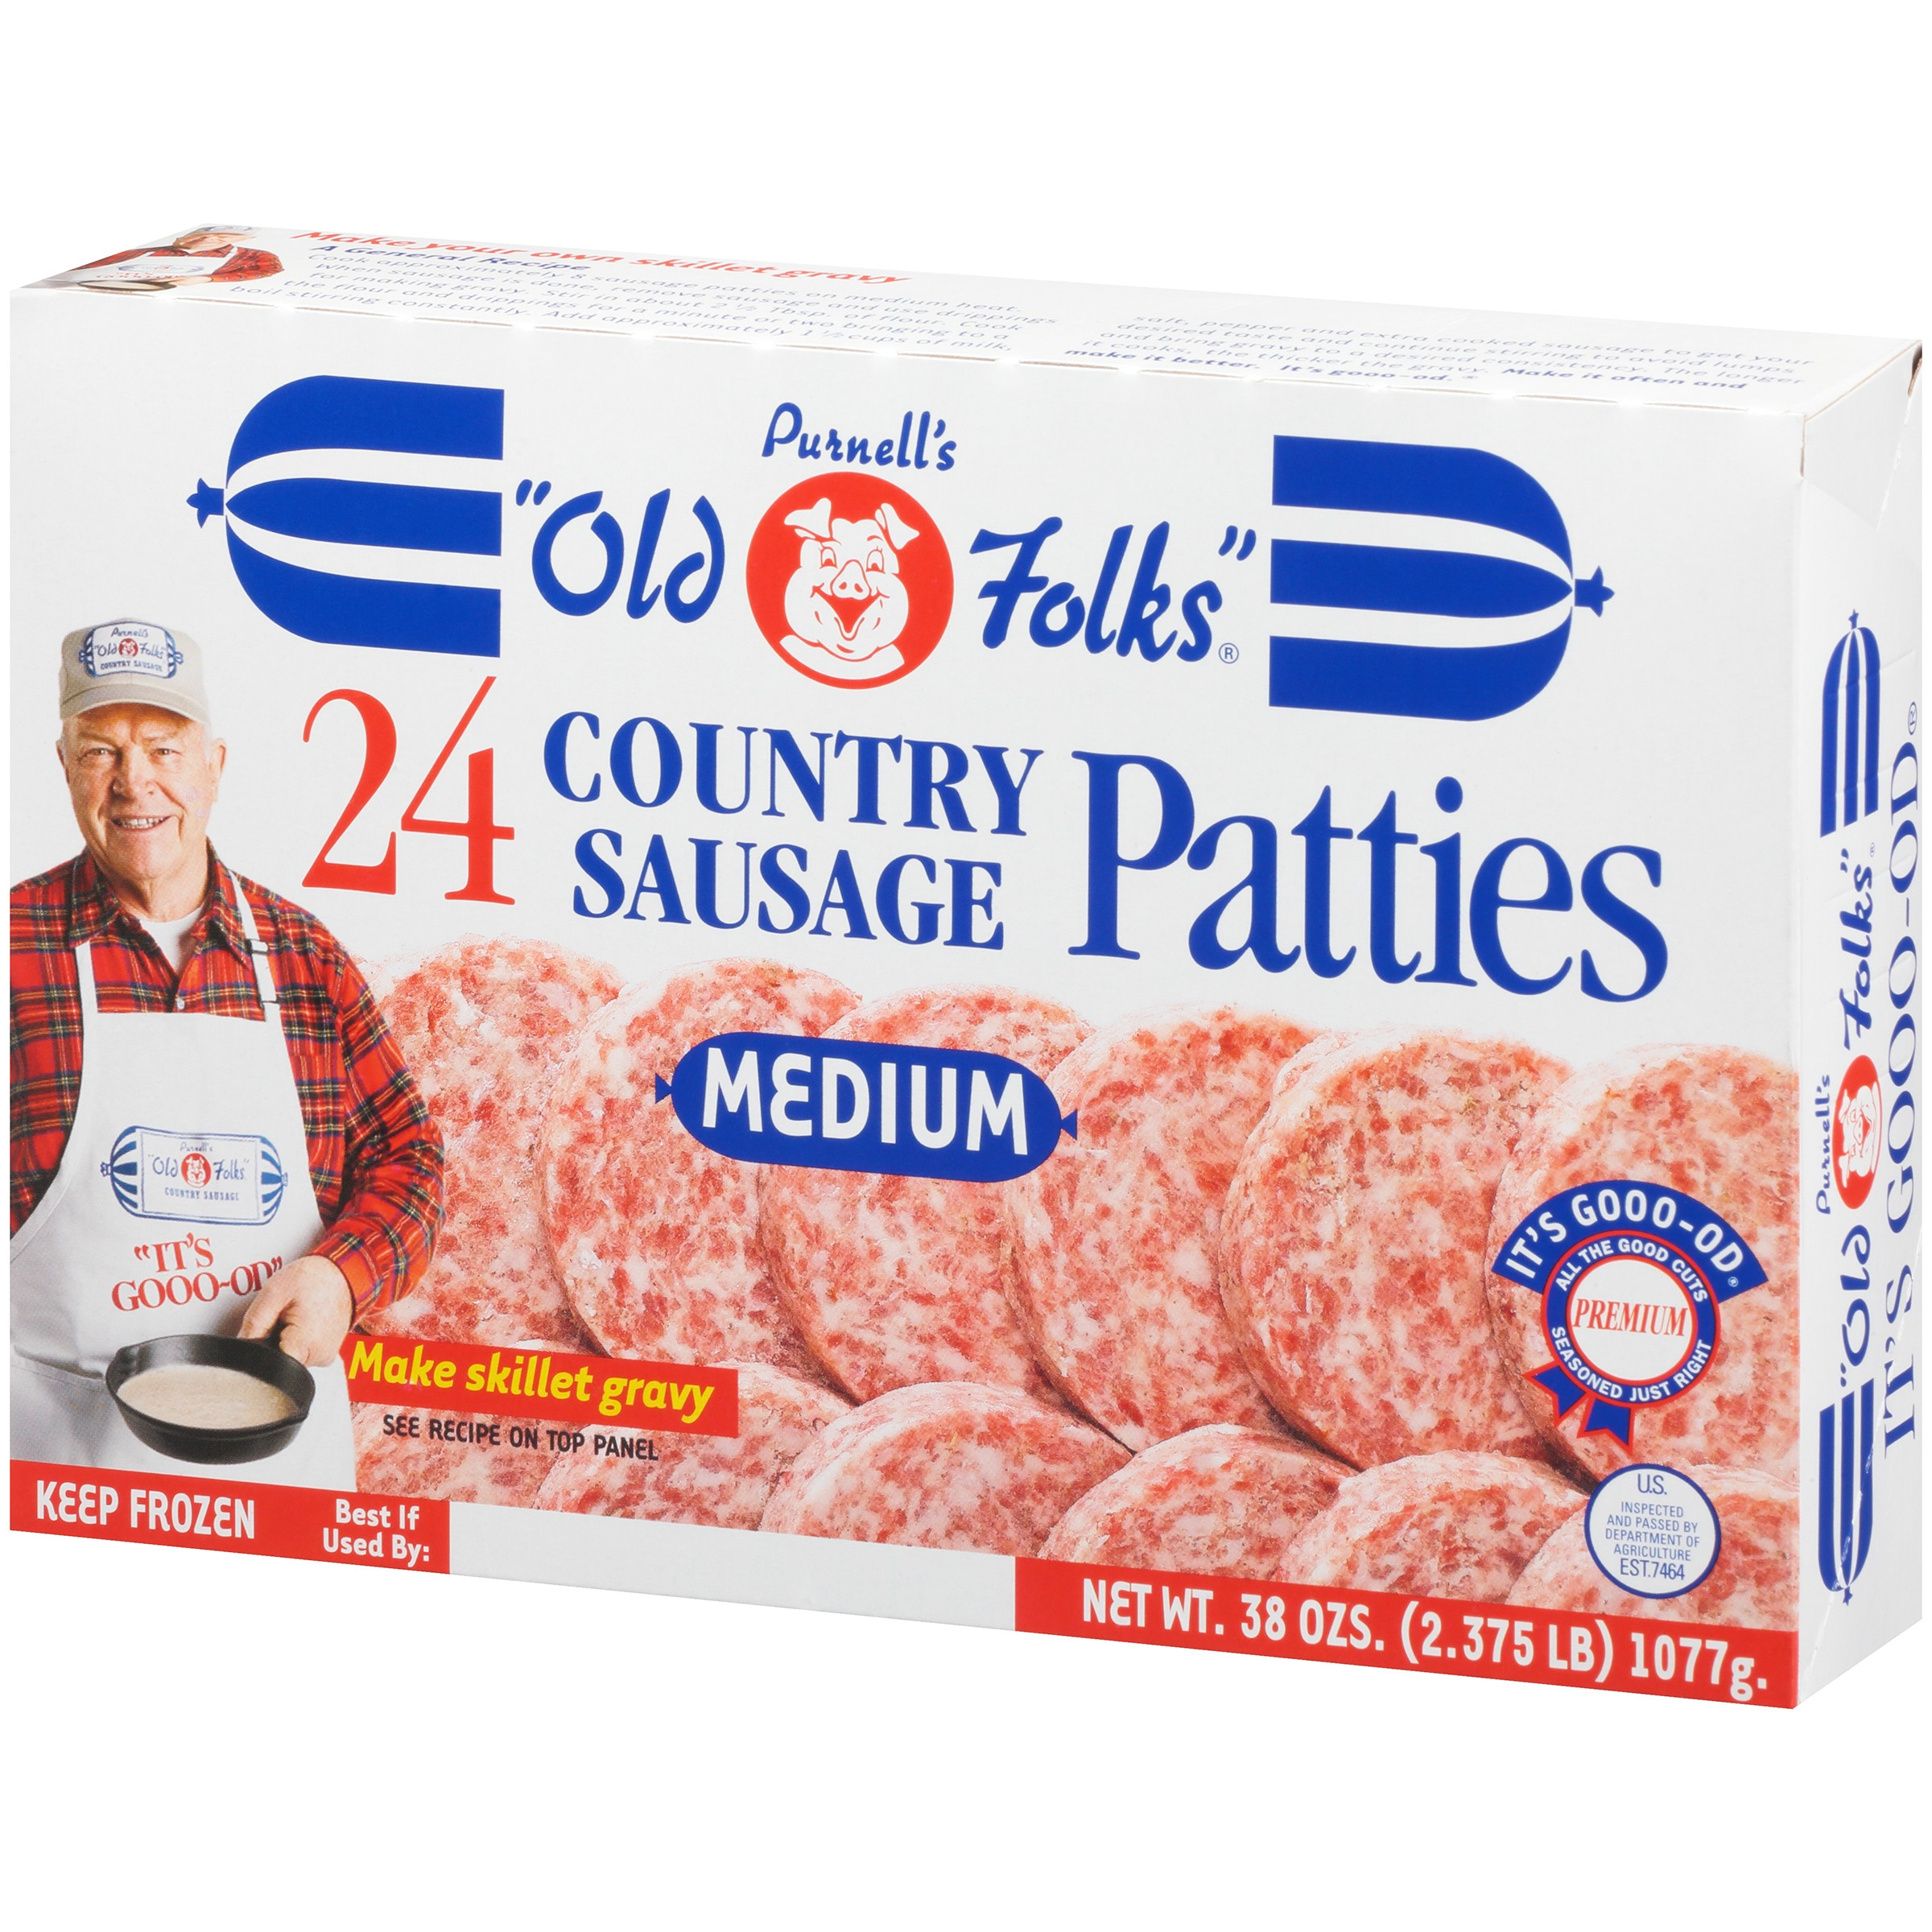 purnell s old folks medium patties 24 ct country sausage 38 oz box walmart com